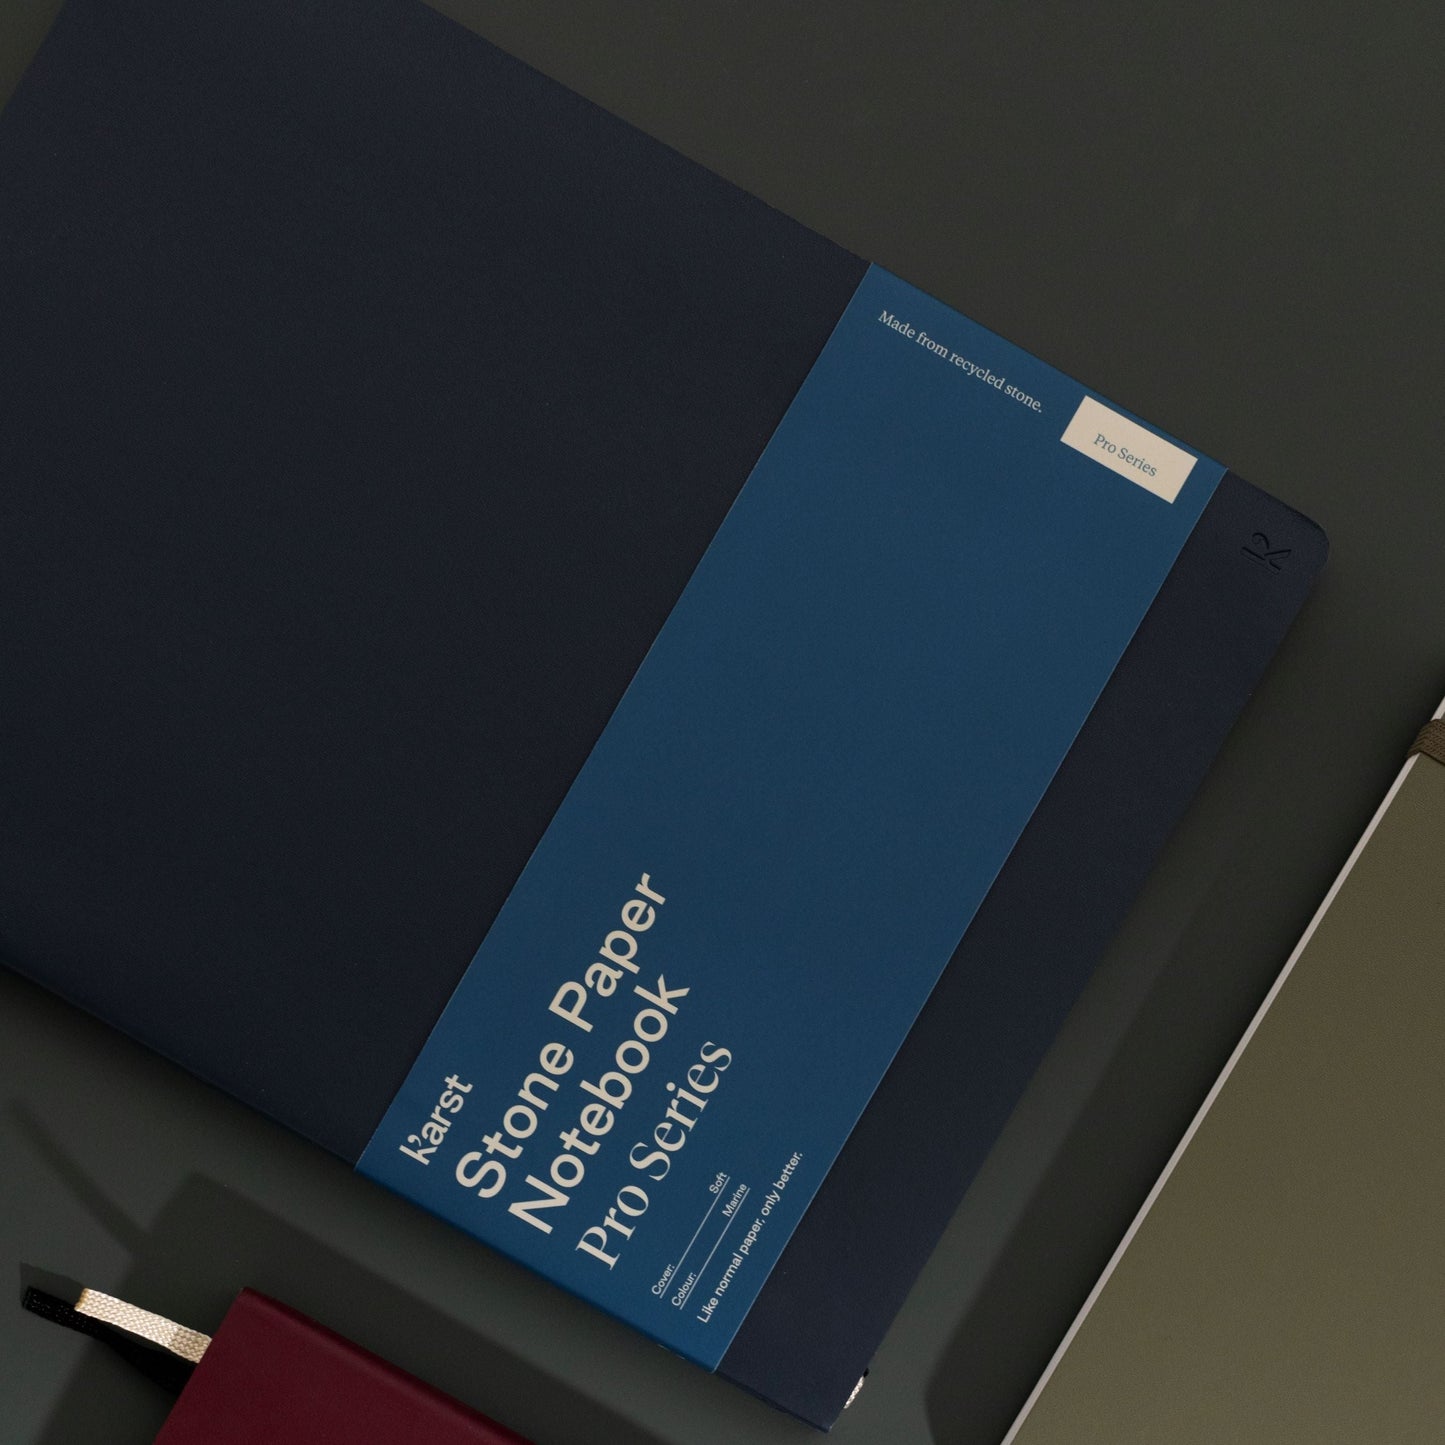 Karst - Steinpapier - B5 Softcover Pro Series Notizbuch